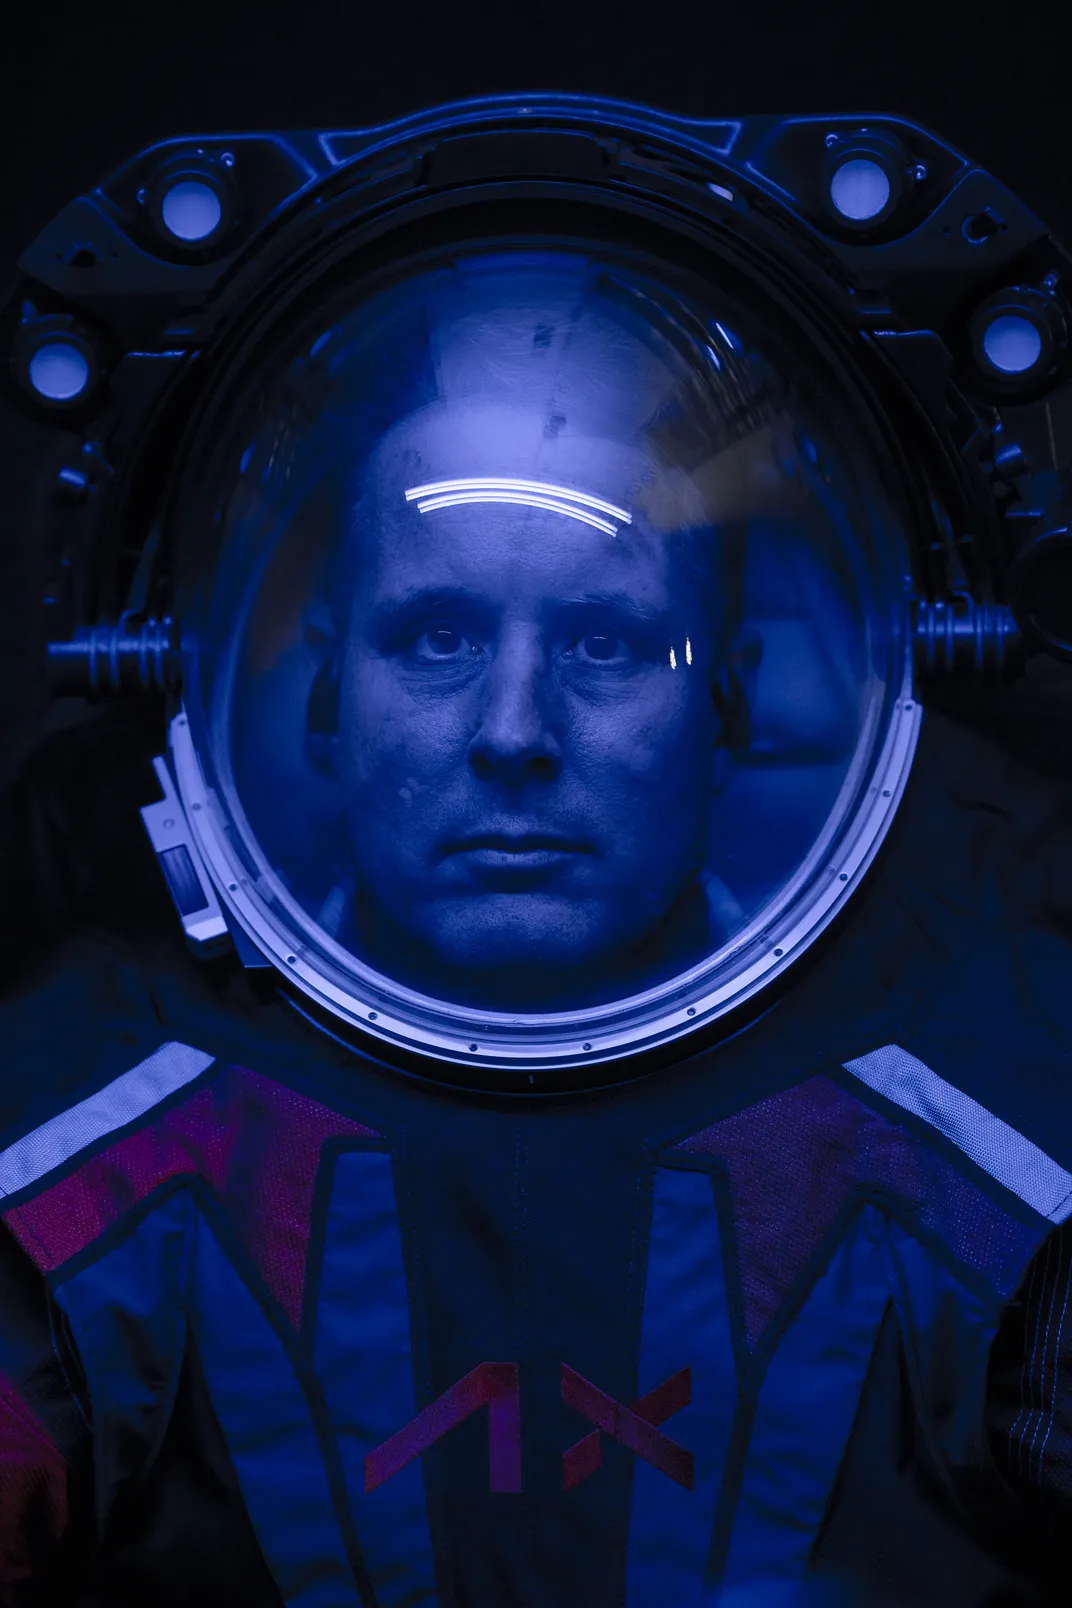 Close-up shot of man's face inside spacesuit helmet